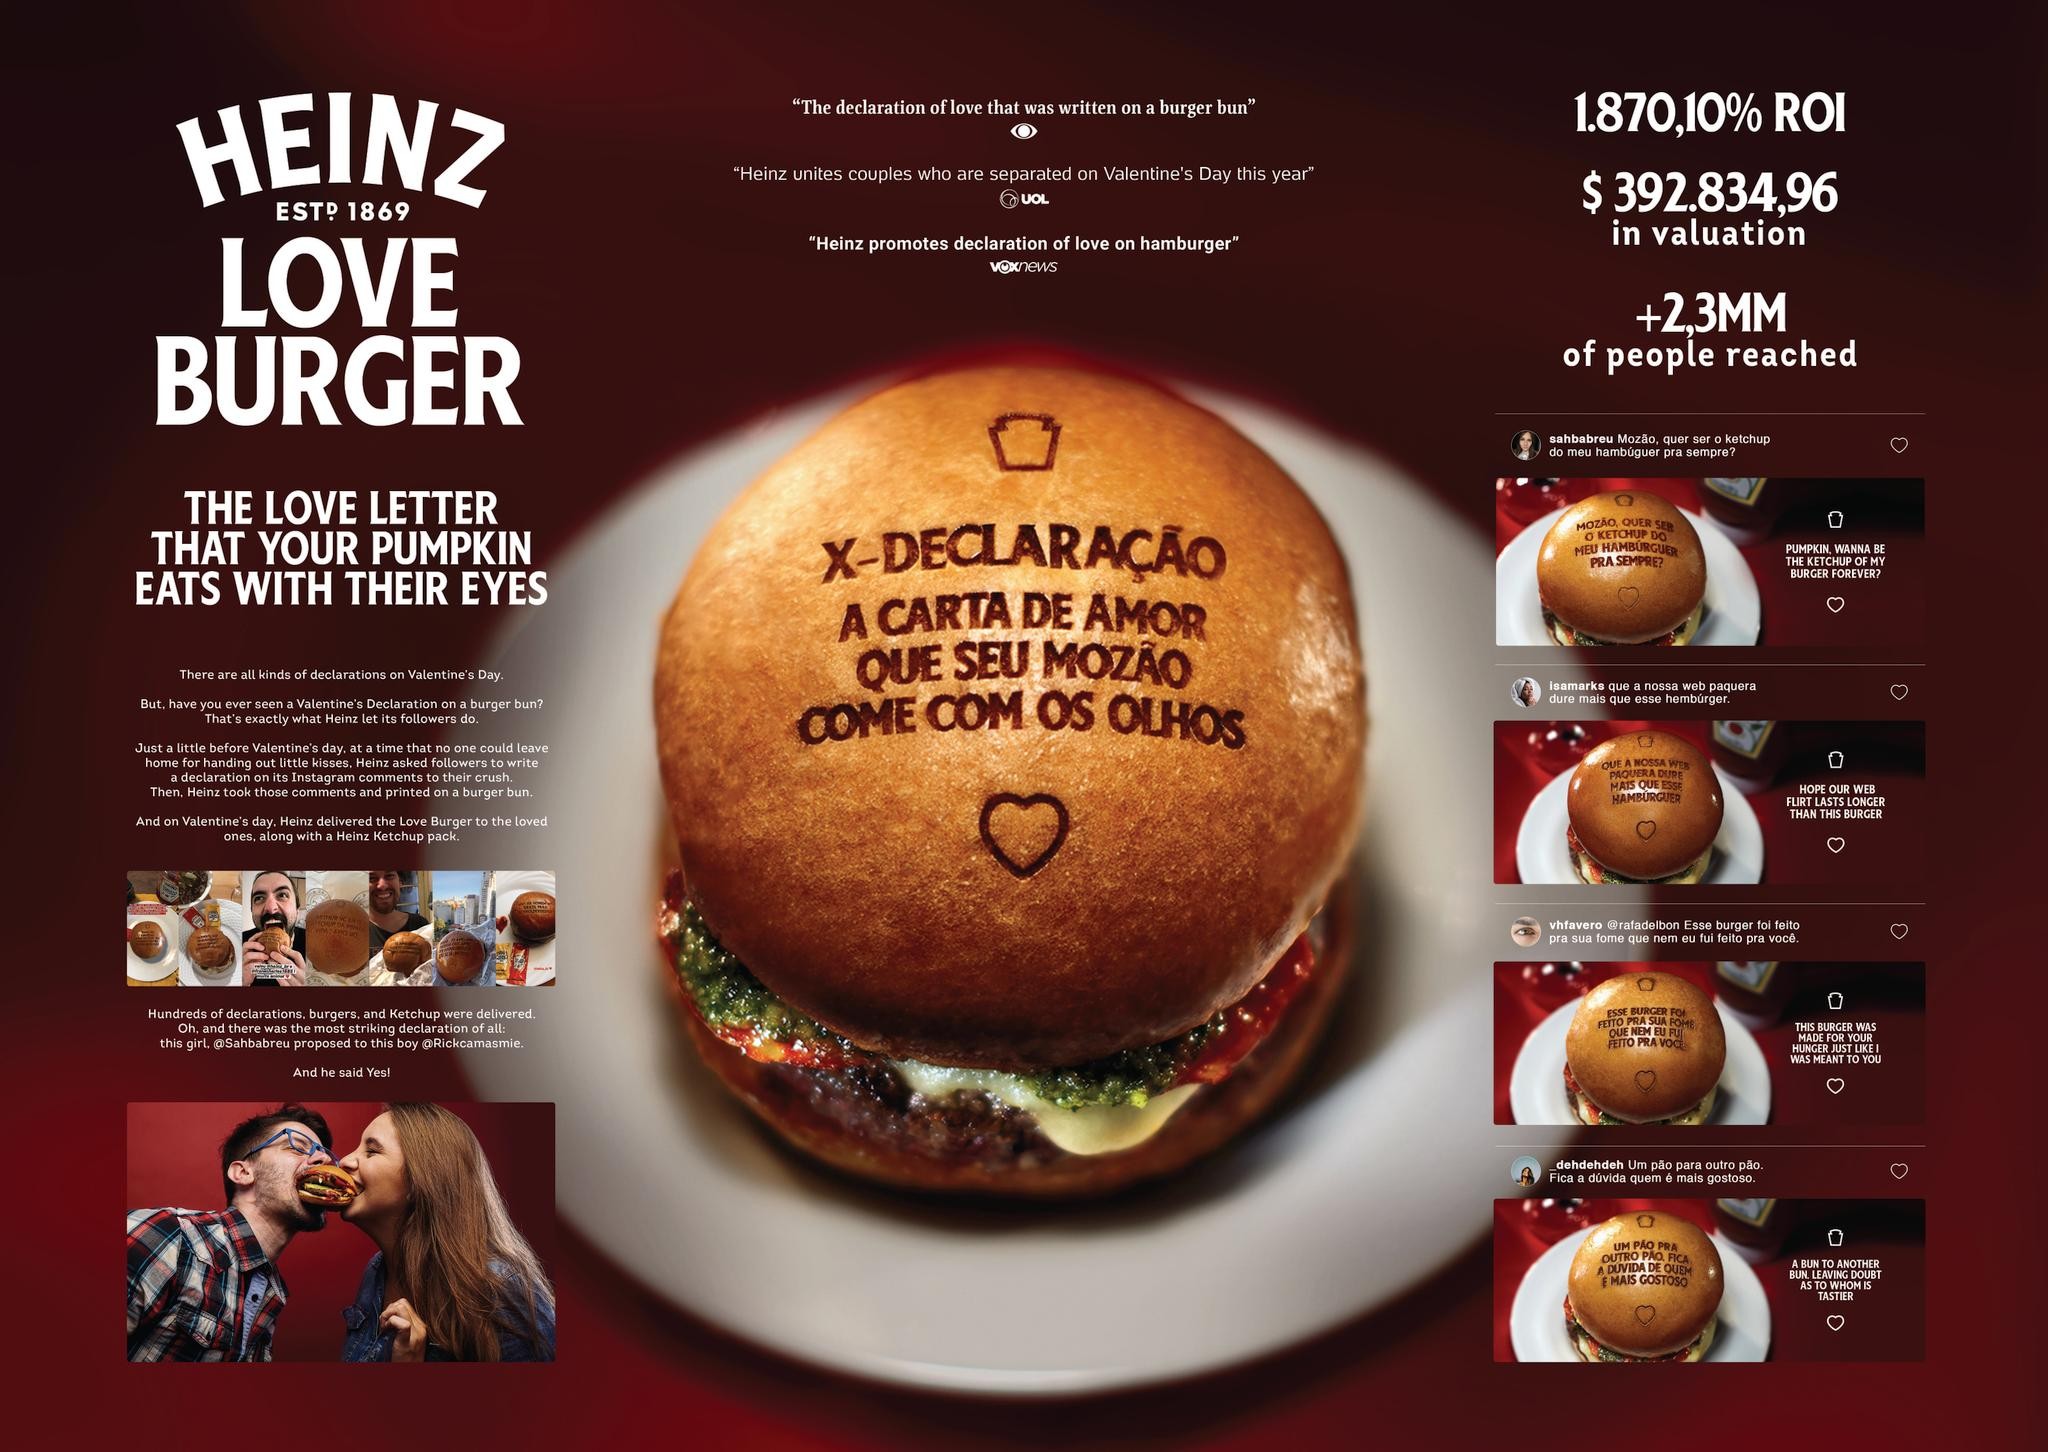 Heinz Love Burger